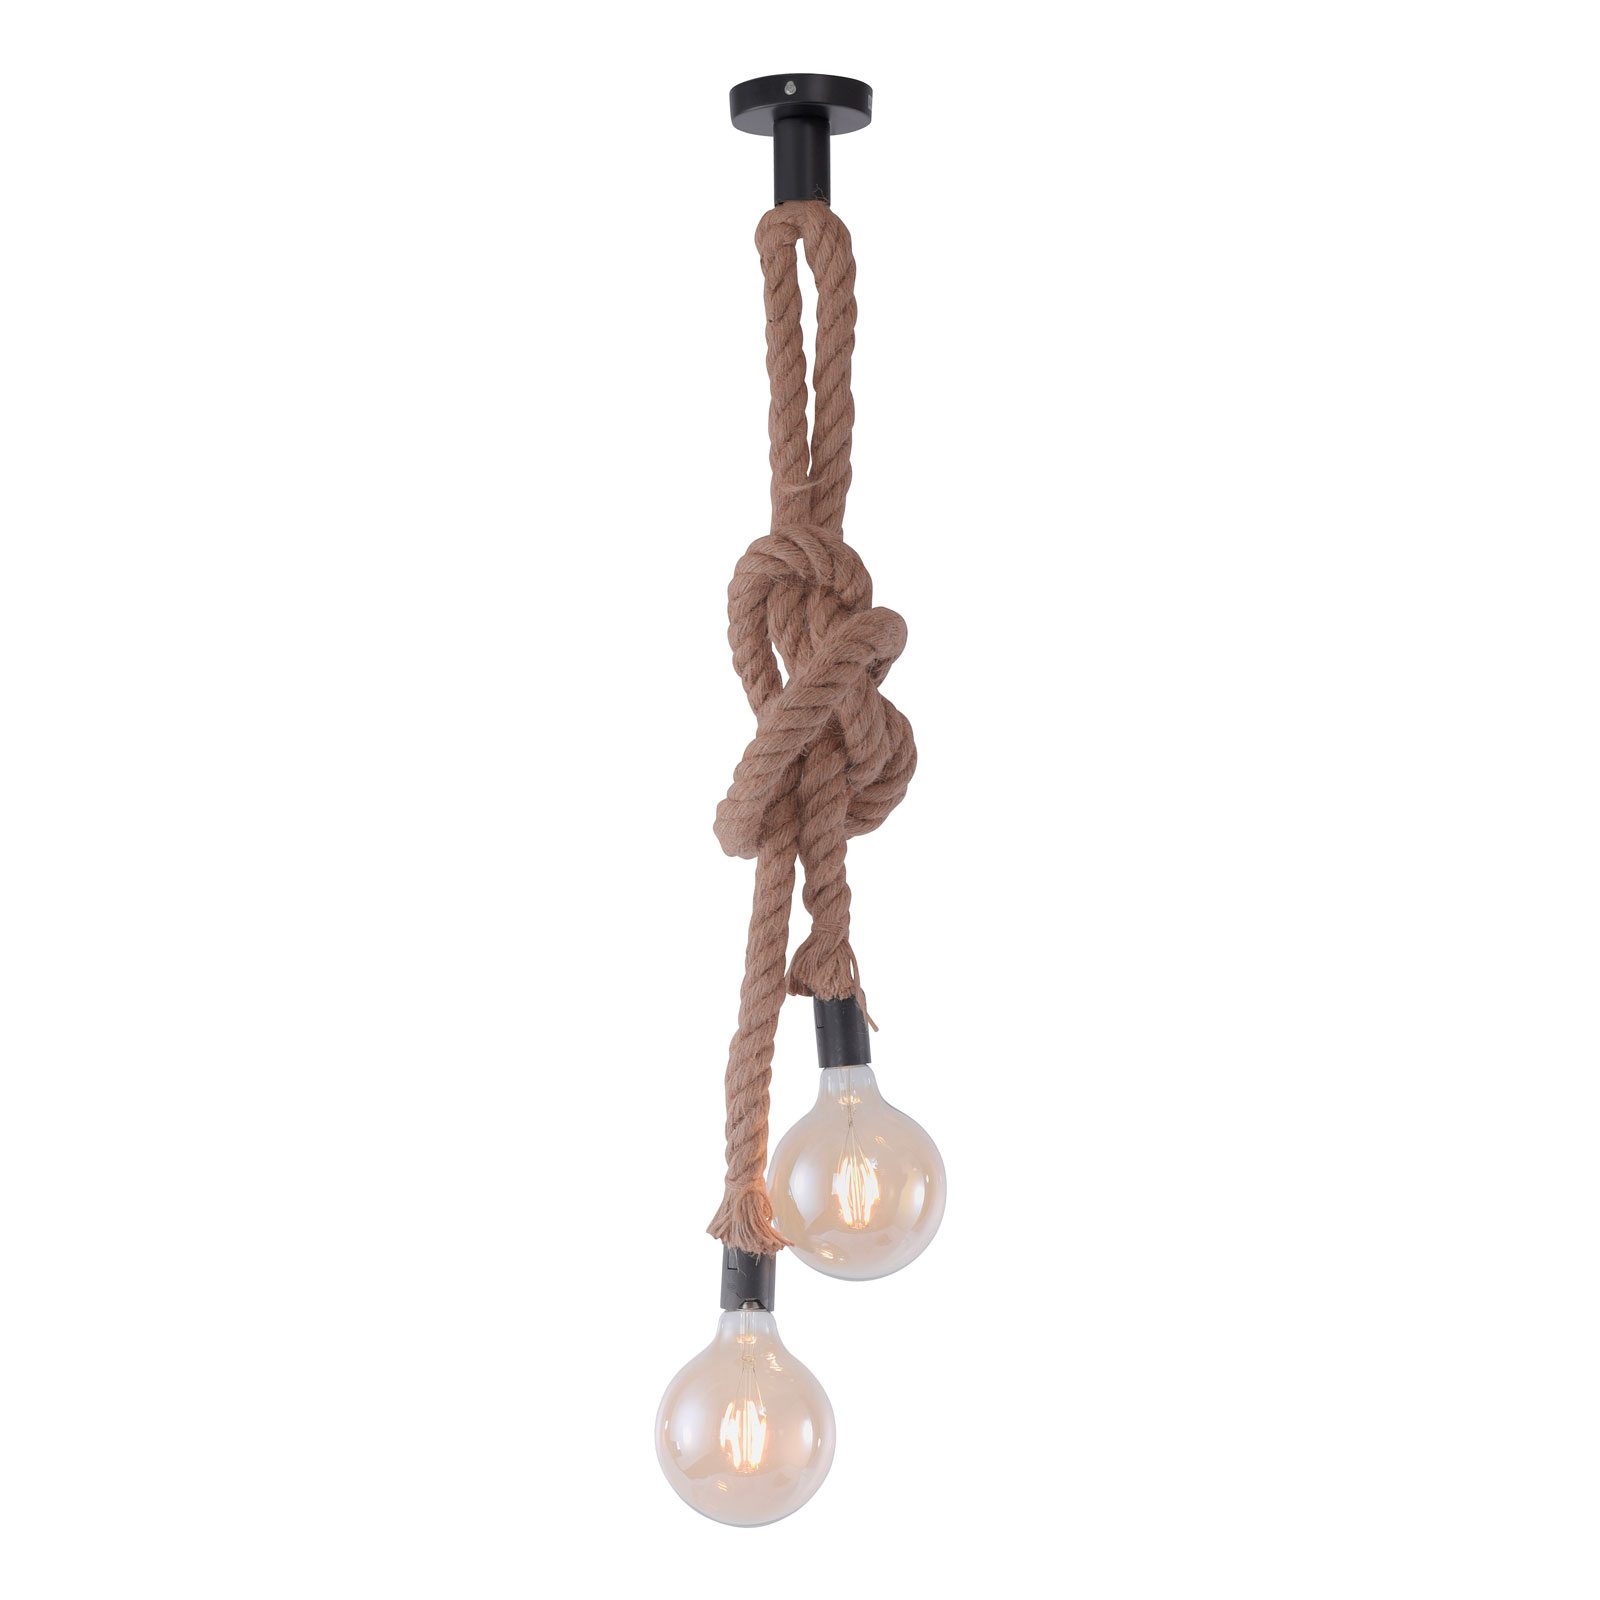 Hanglamp Rope met kabel, 2-lamps